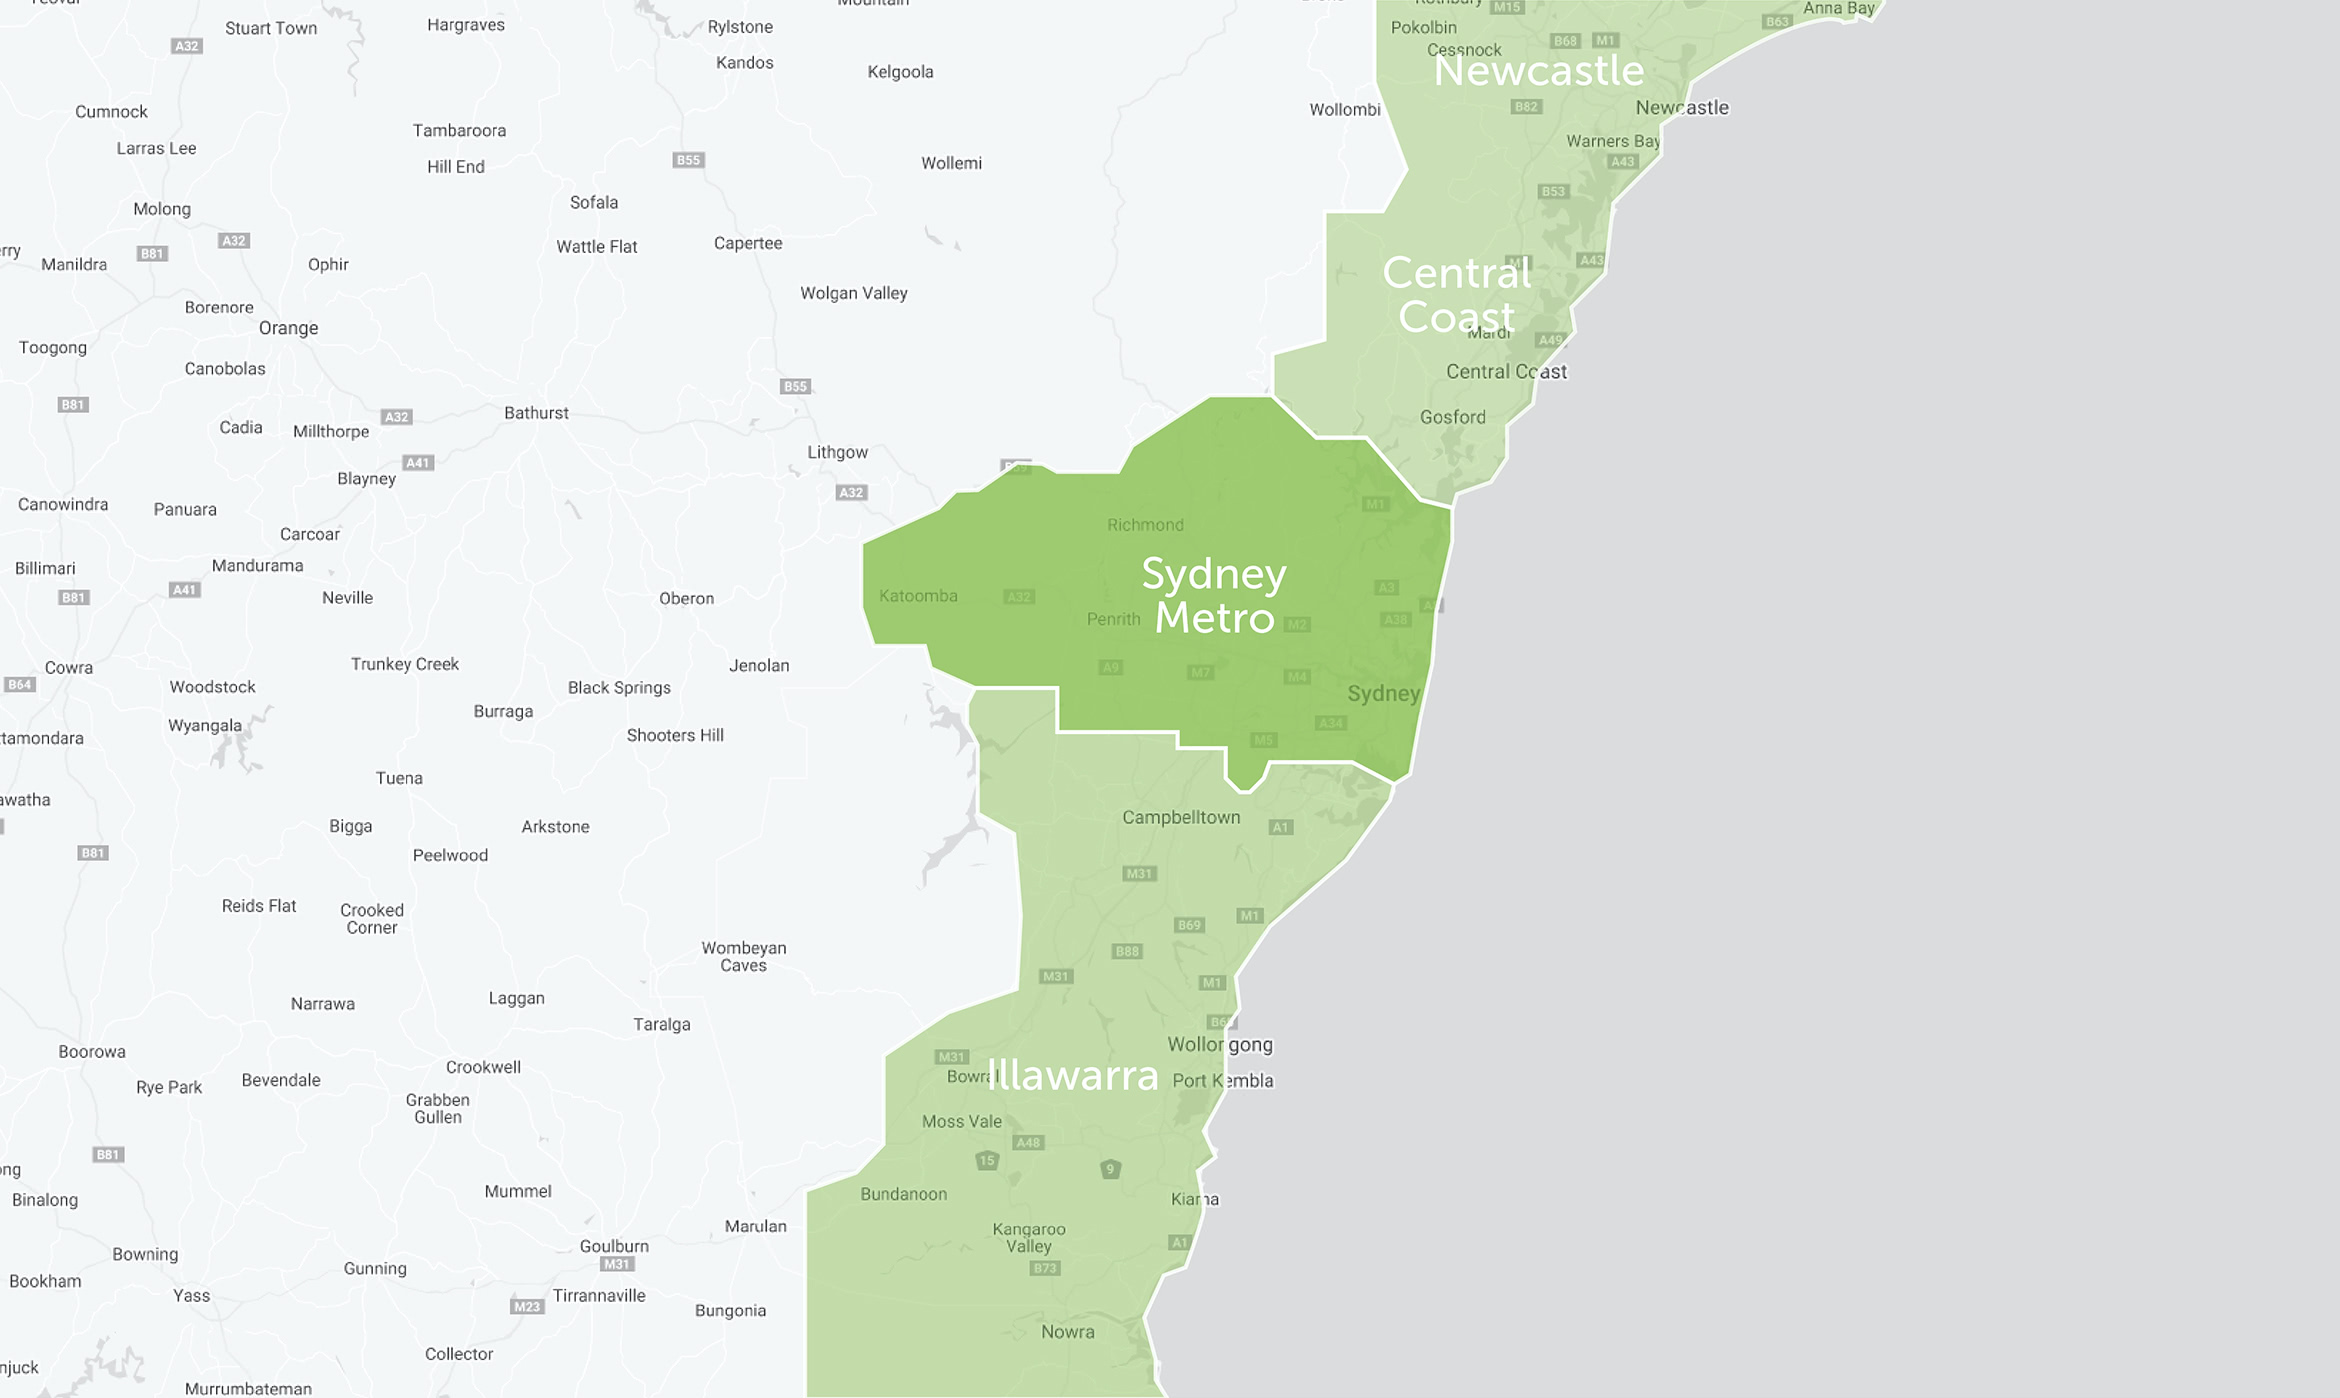 Map of Newcastle, Central Coast, Sydney Metro, and Illawarra